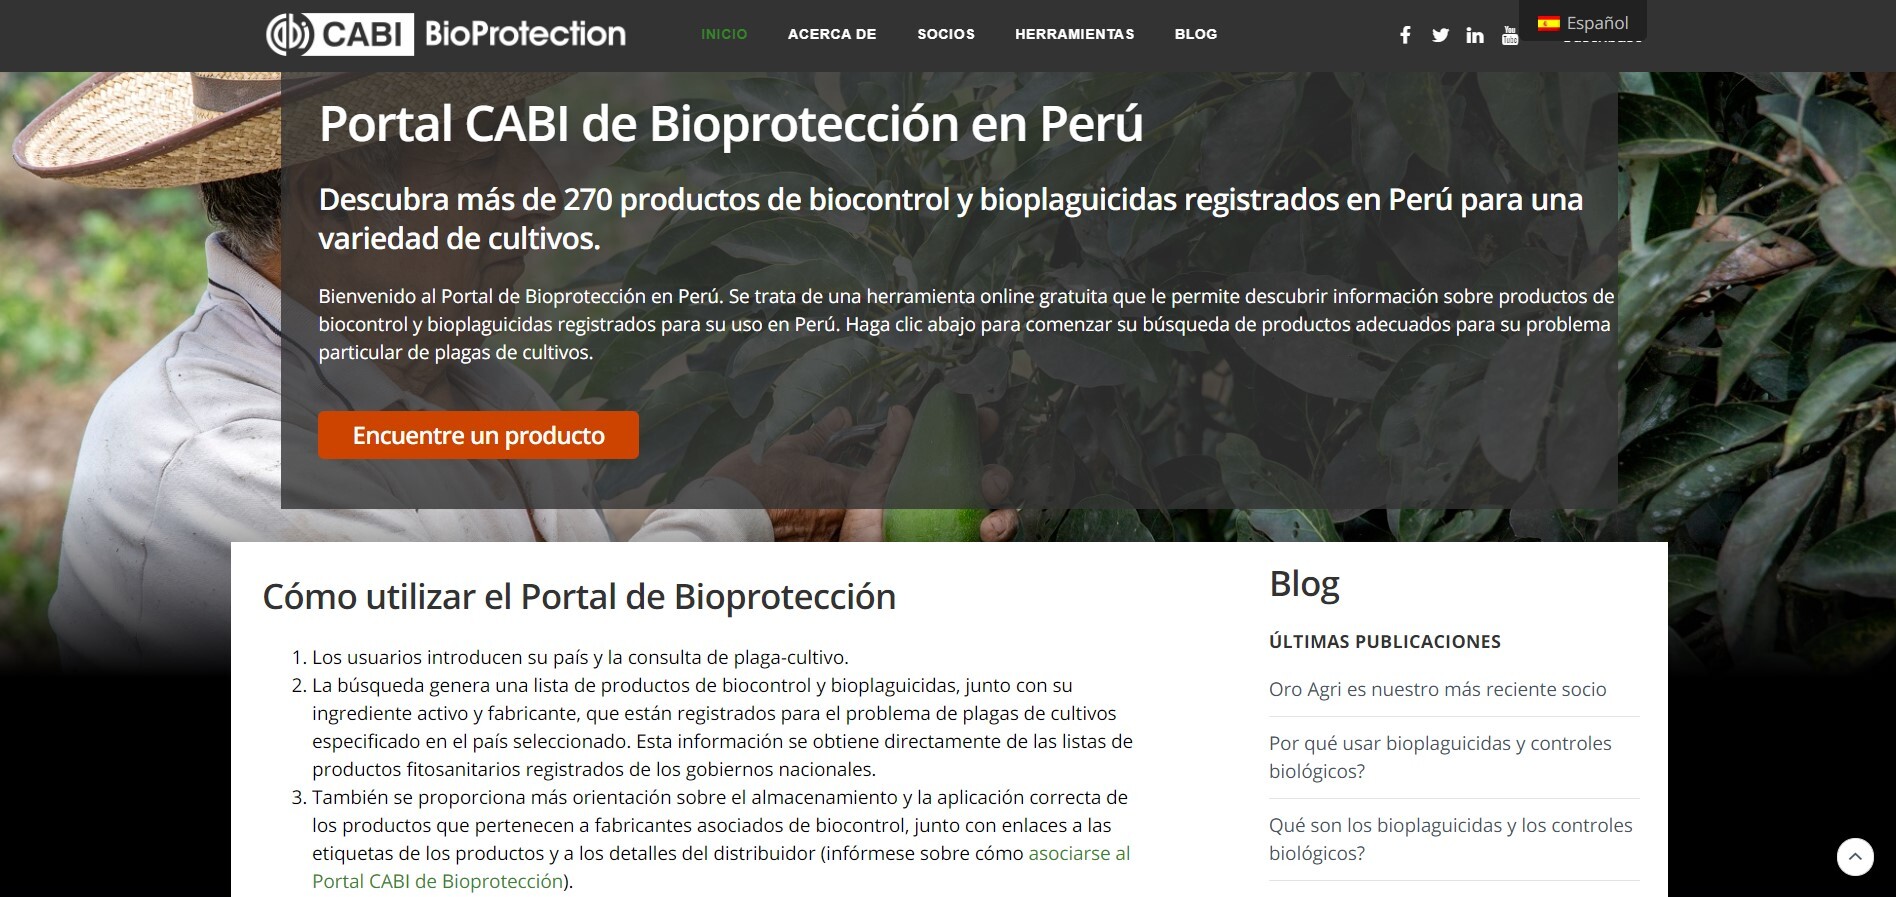 Cabi_Bioprotection_Peru.jpg